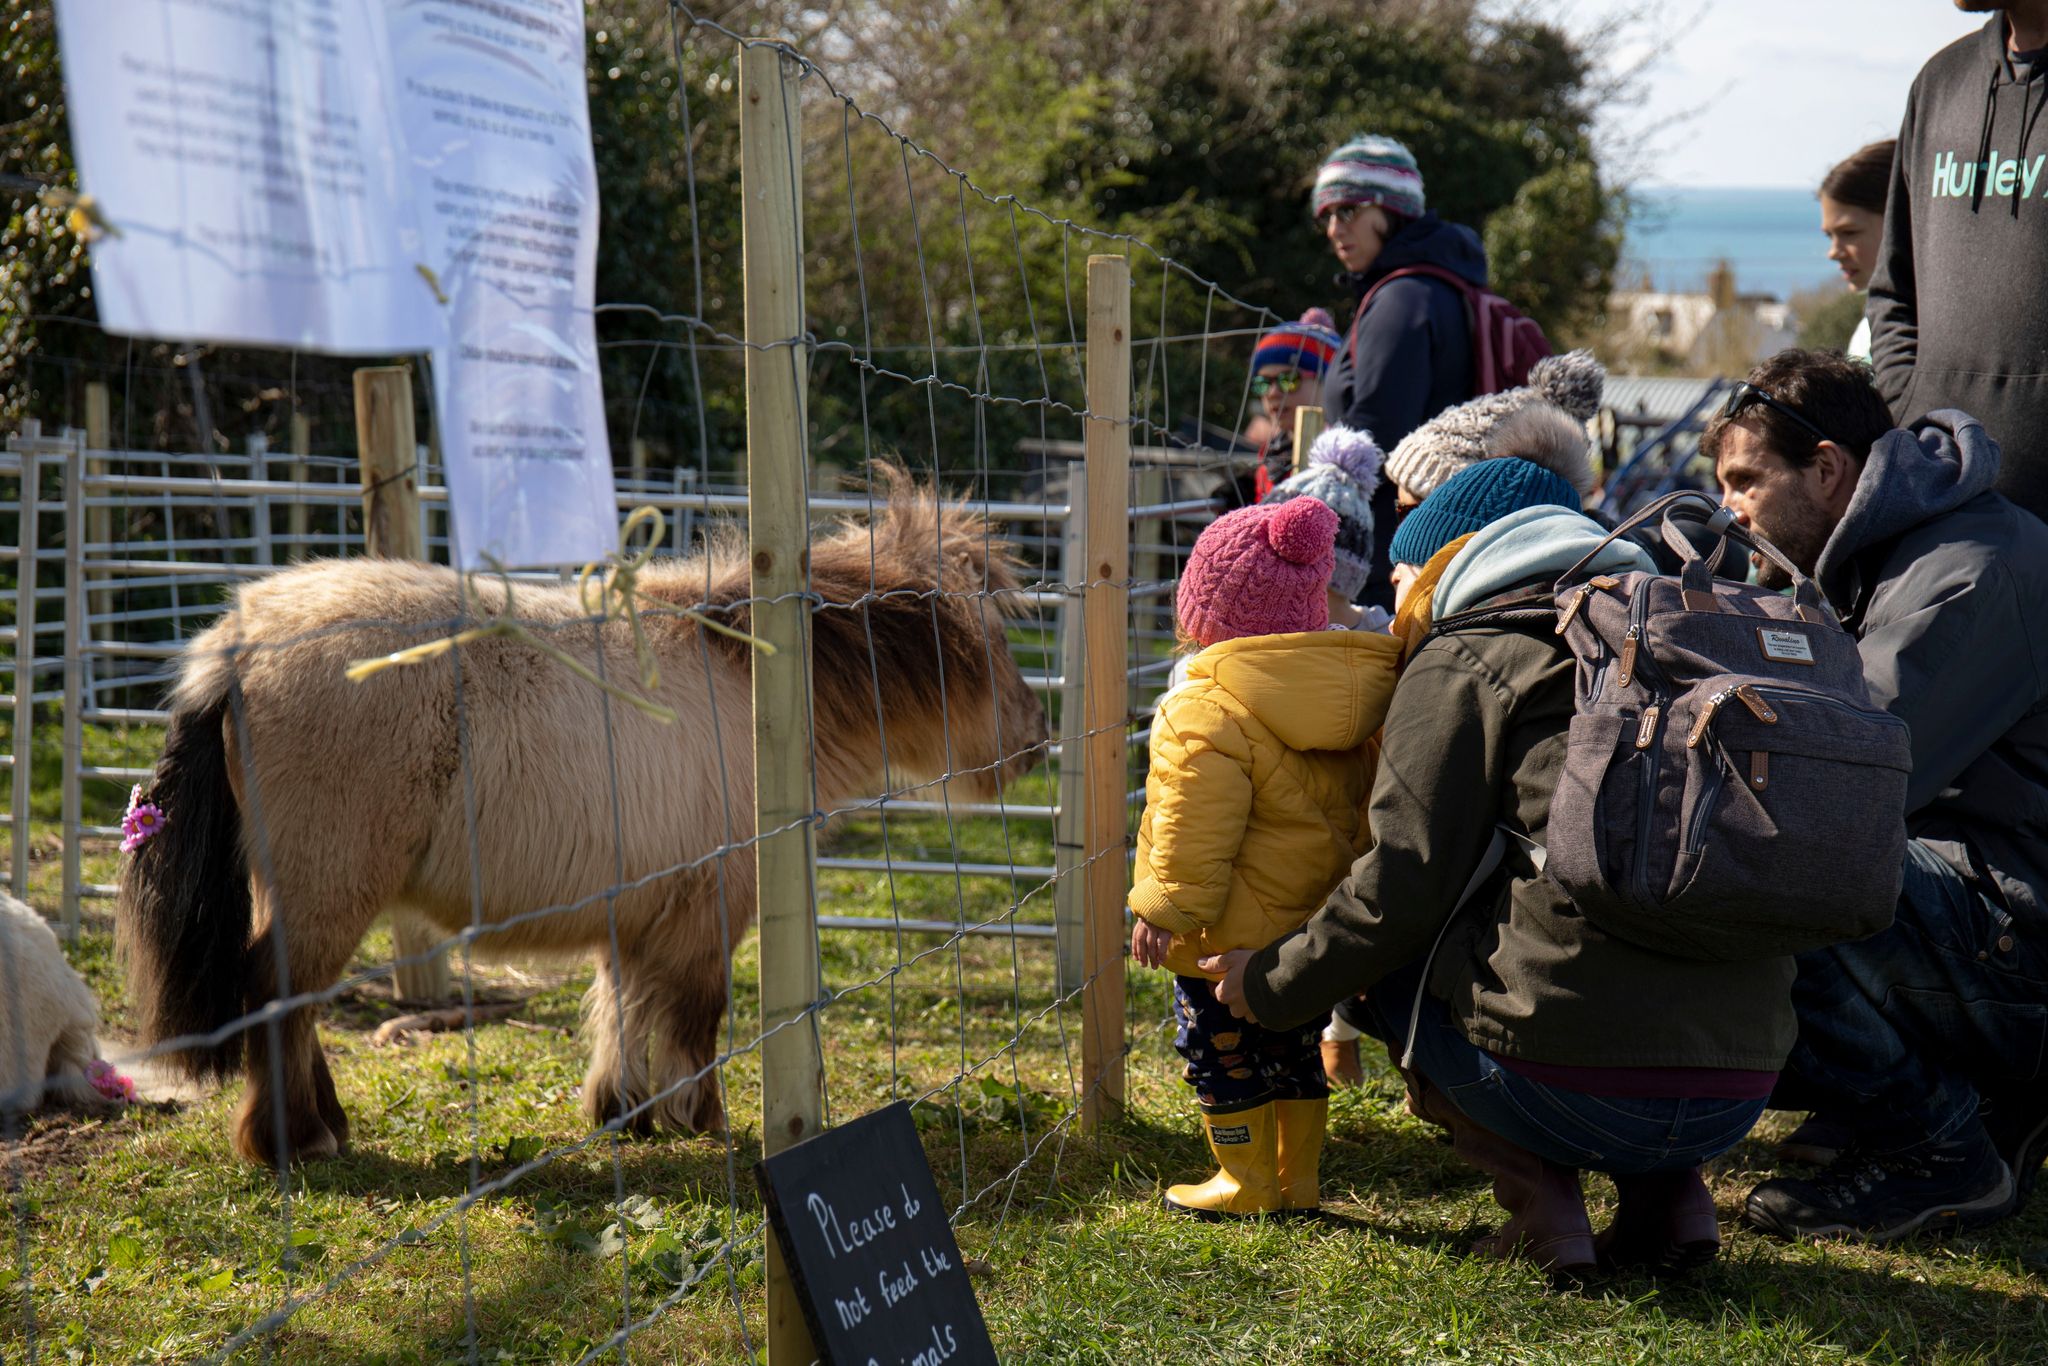 Ponies, family visit, farm animals, farm day